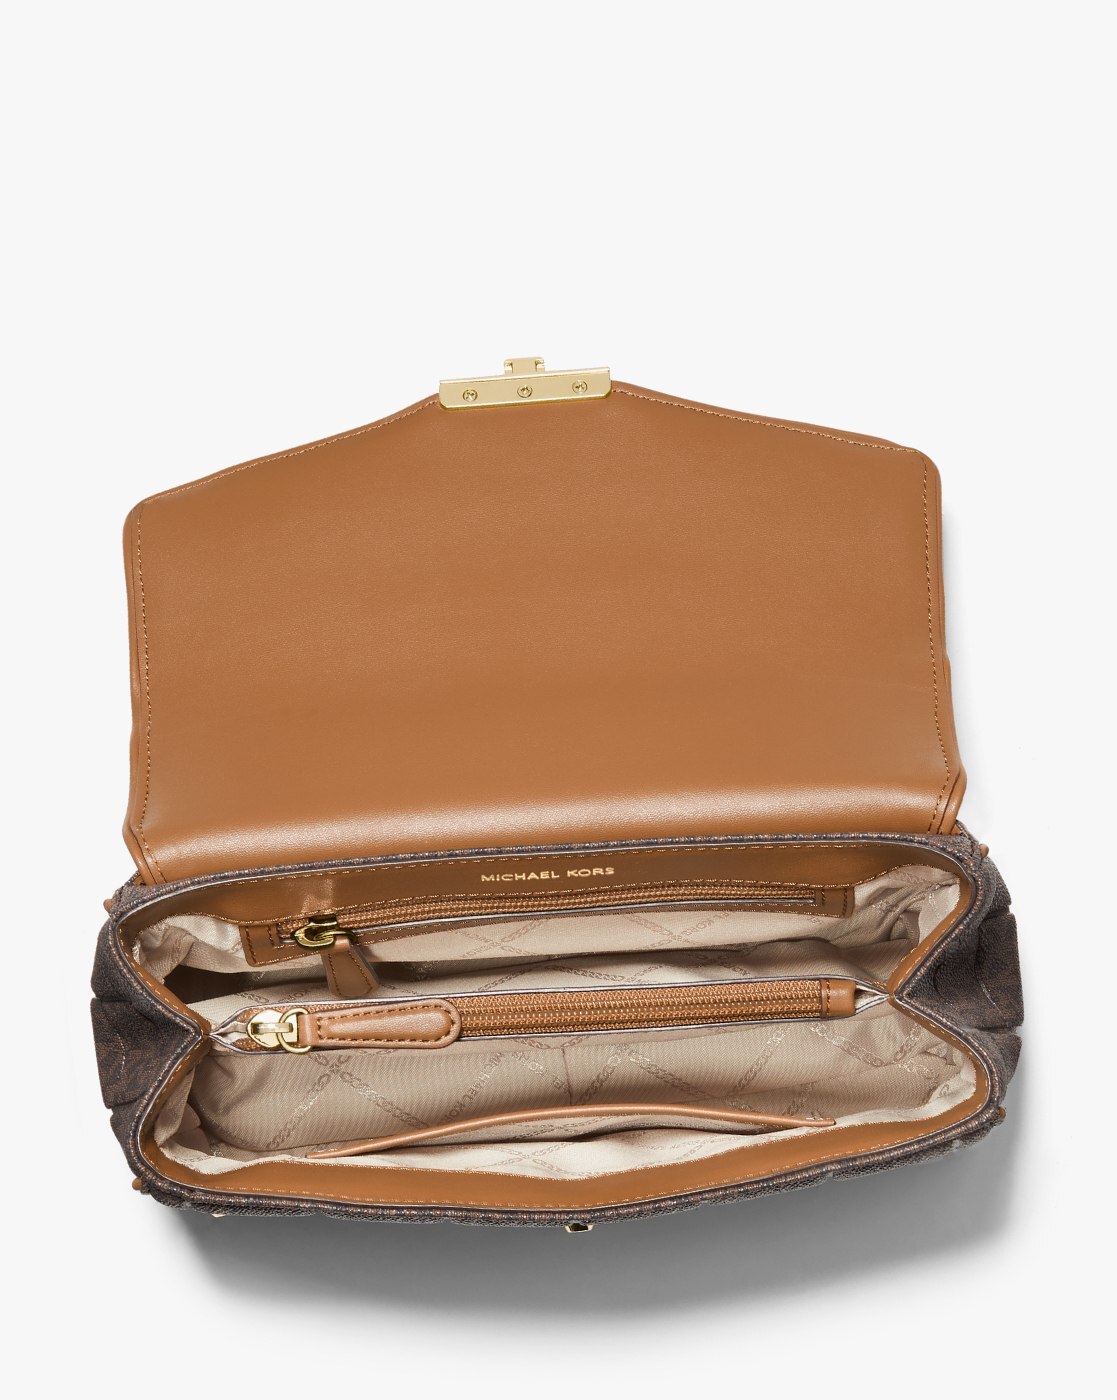 Michael Kors Portia Large Burnt Orange Saffiano Leather Shoulder Crossbody  Bag  eBay